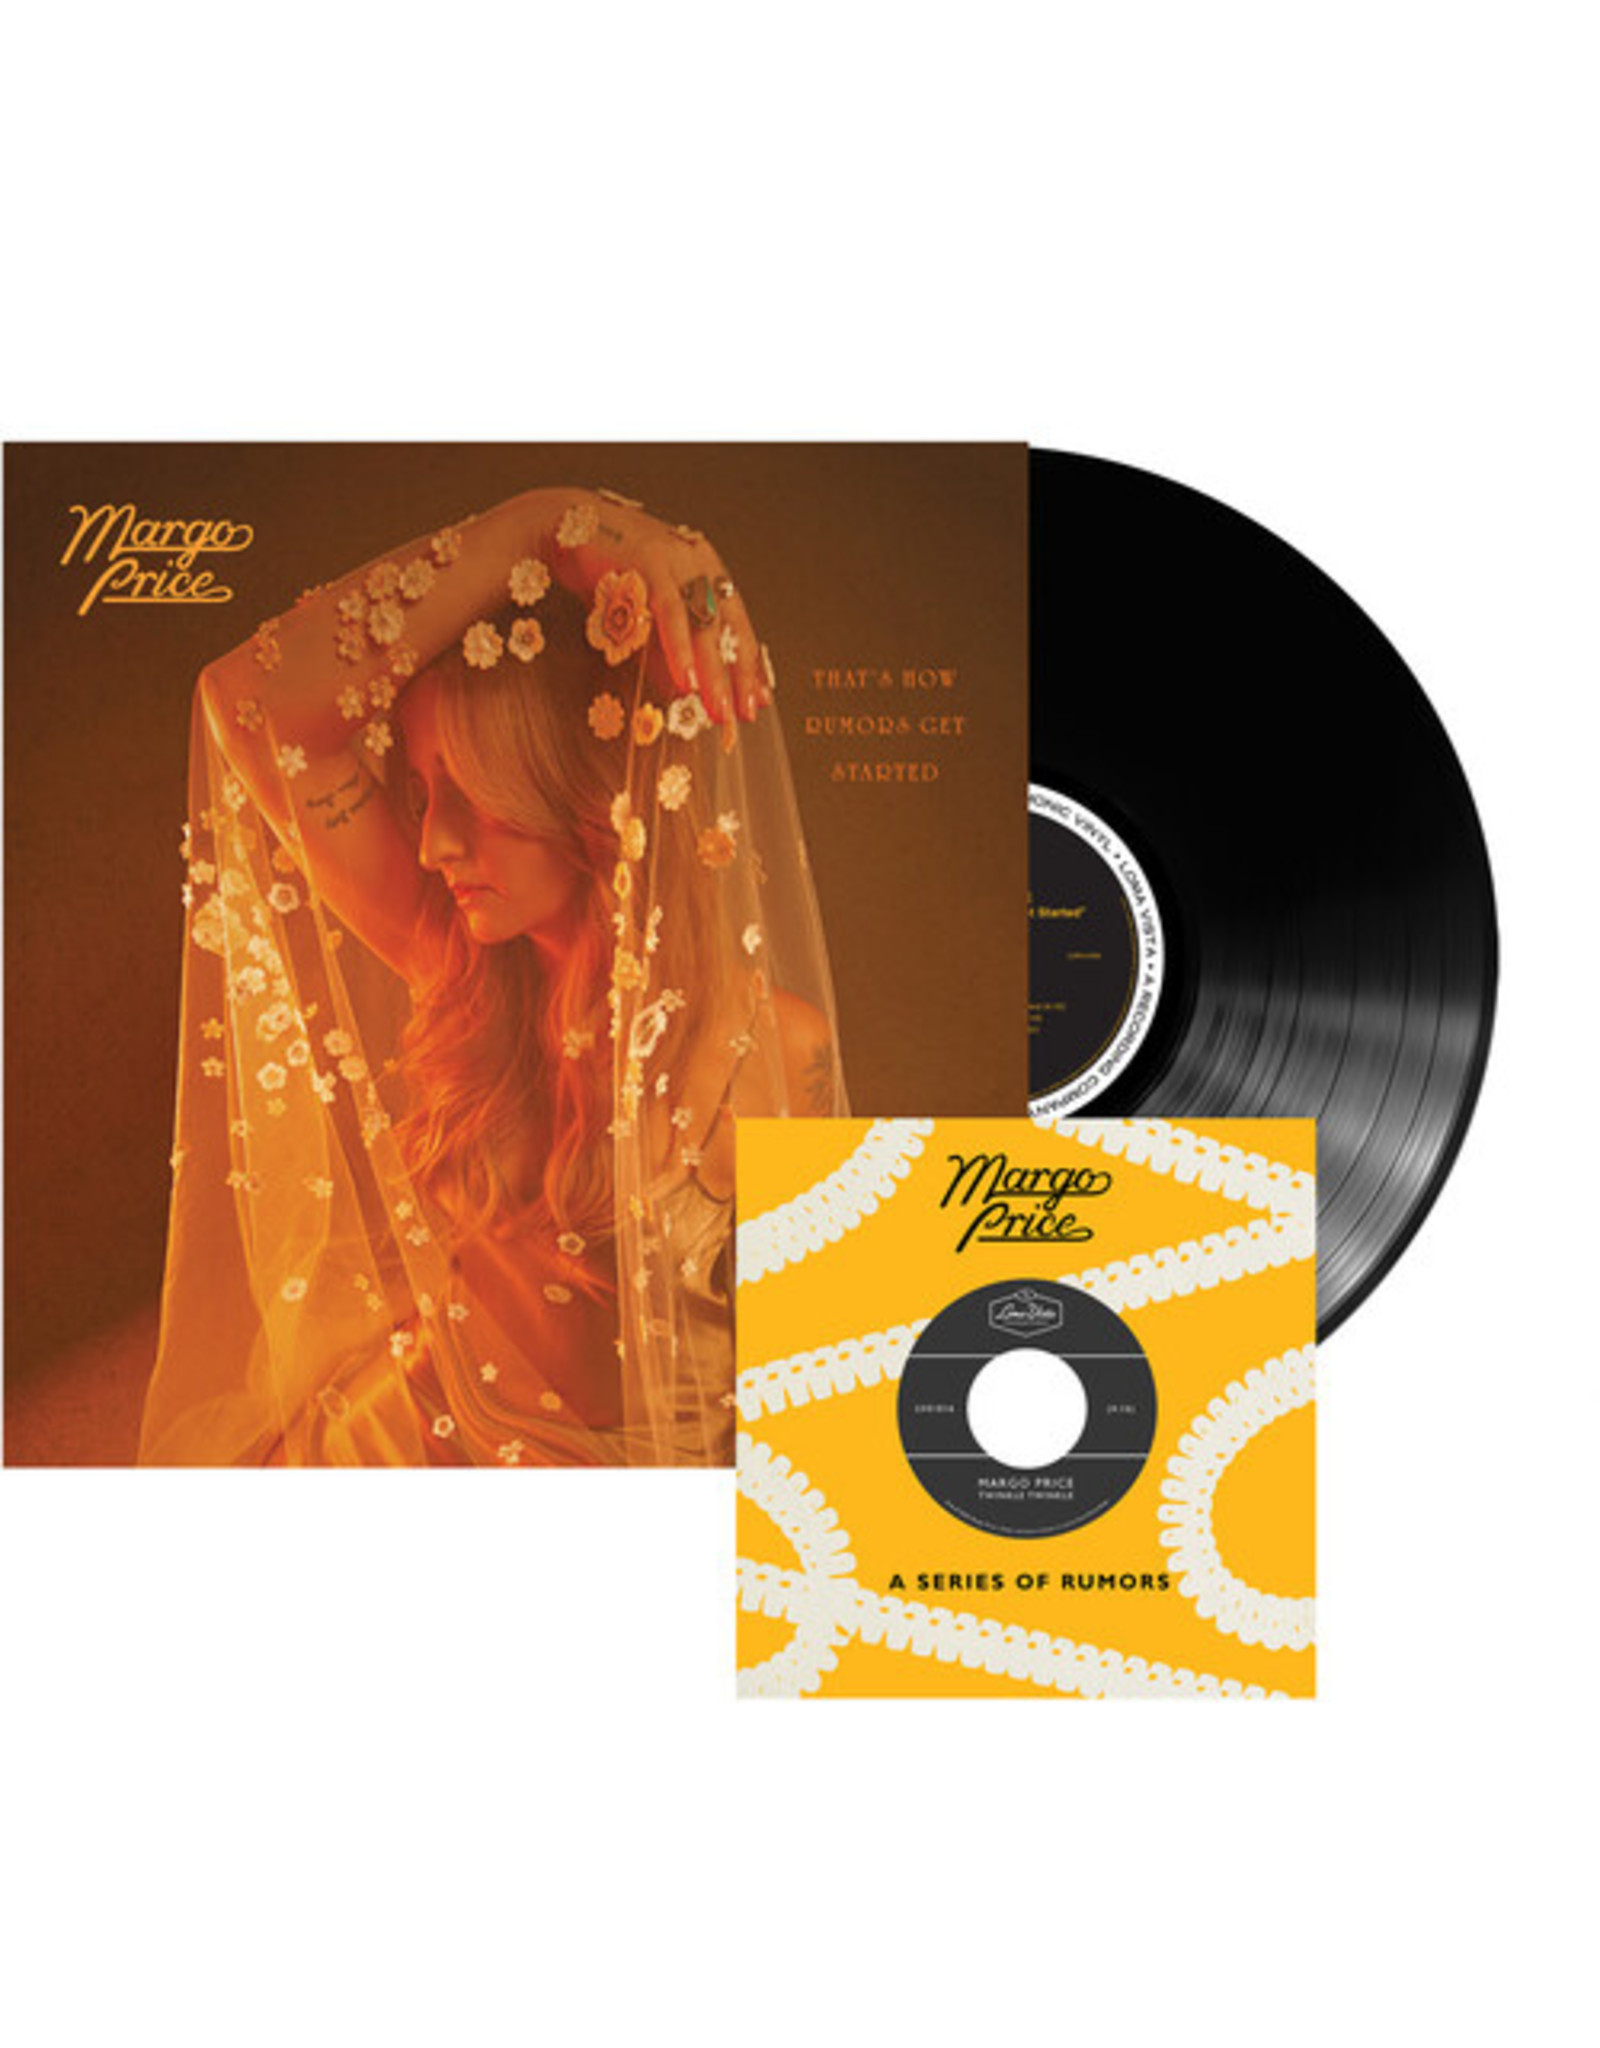 New Vinyl Margo Price - That's How Rumors Get Started LP